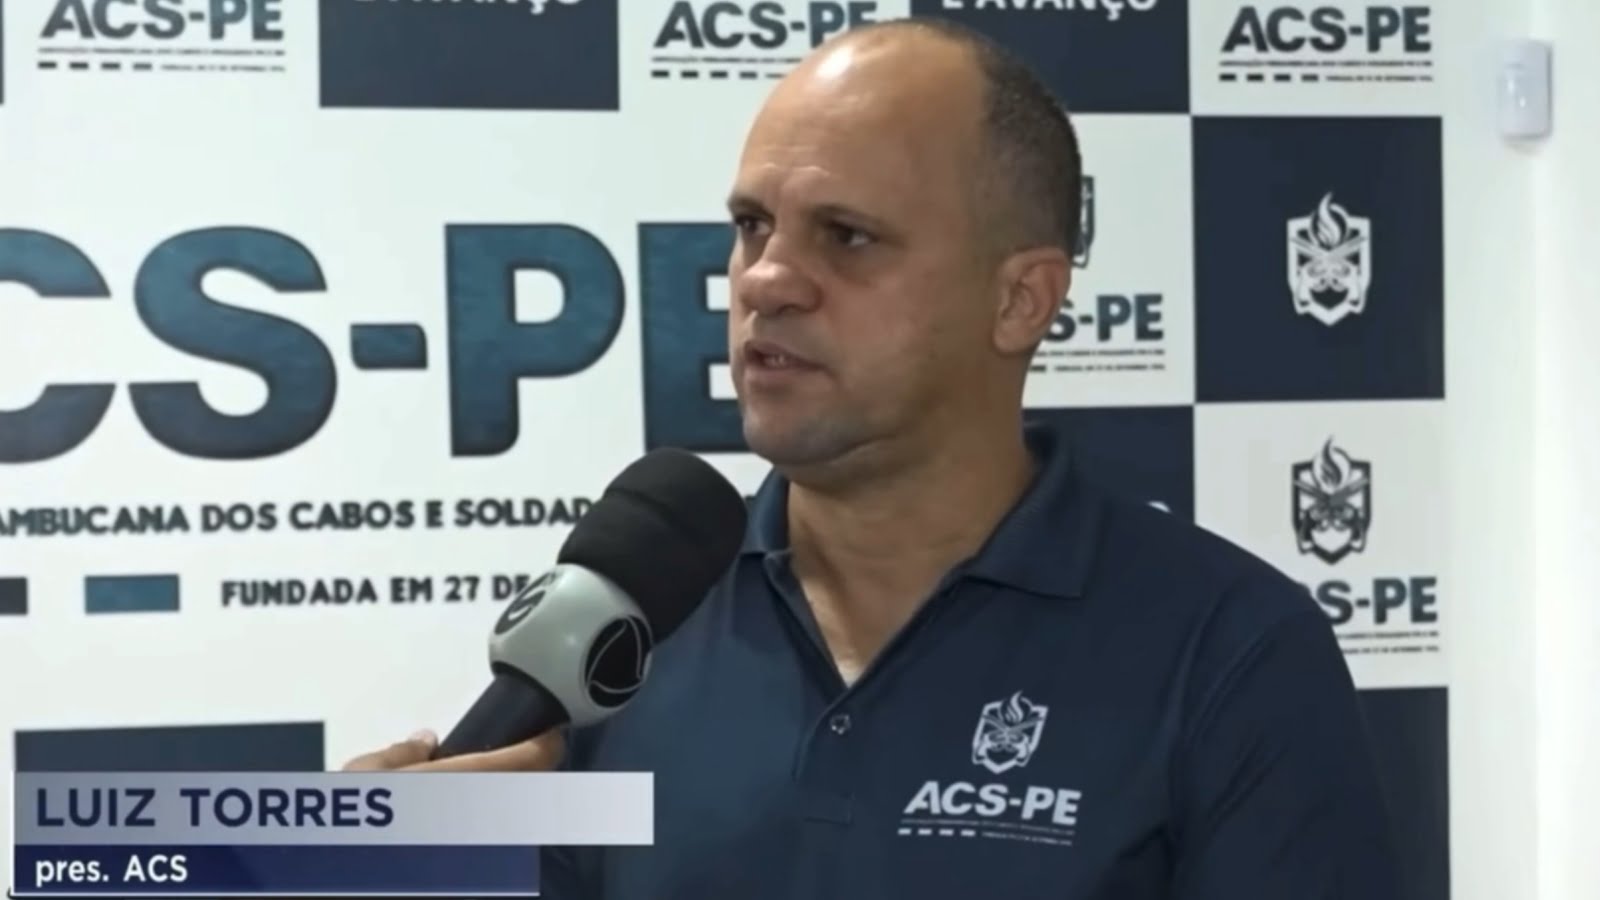 Luiz Torres - Presidente da ACS-PE